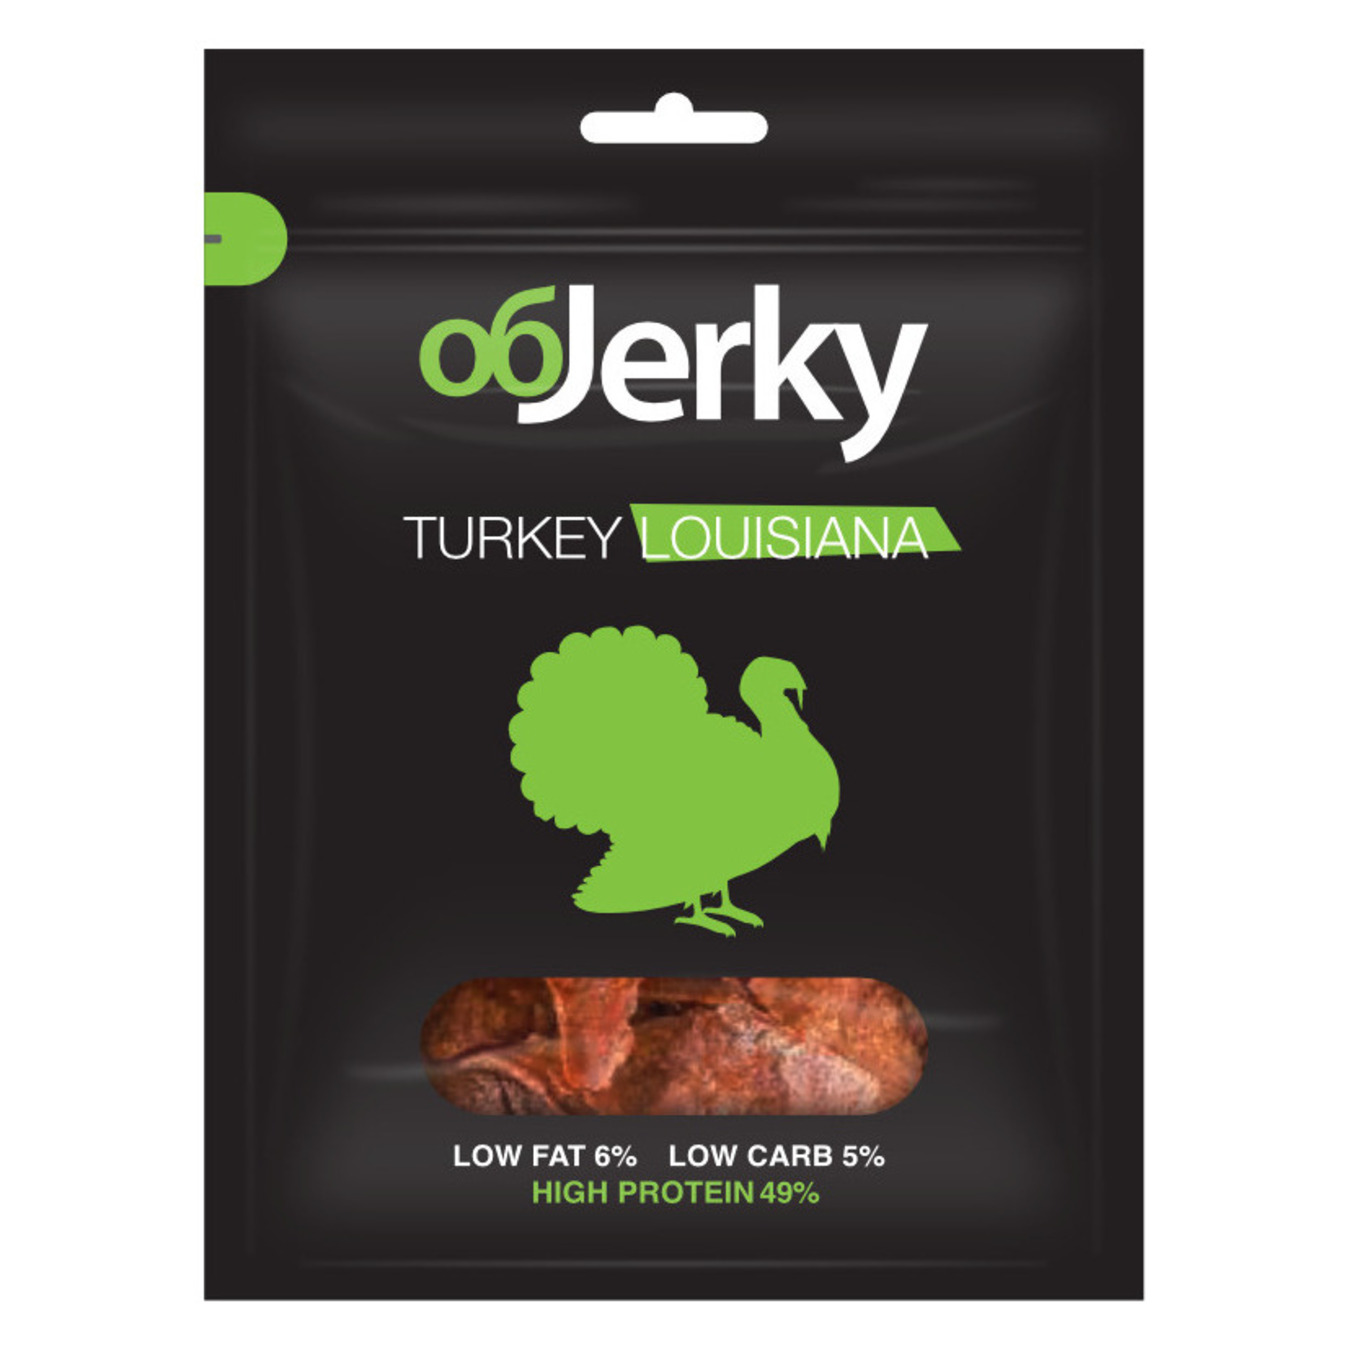 Objerky dried turkey meat 50g